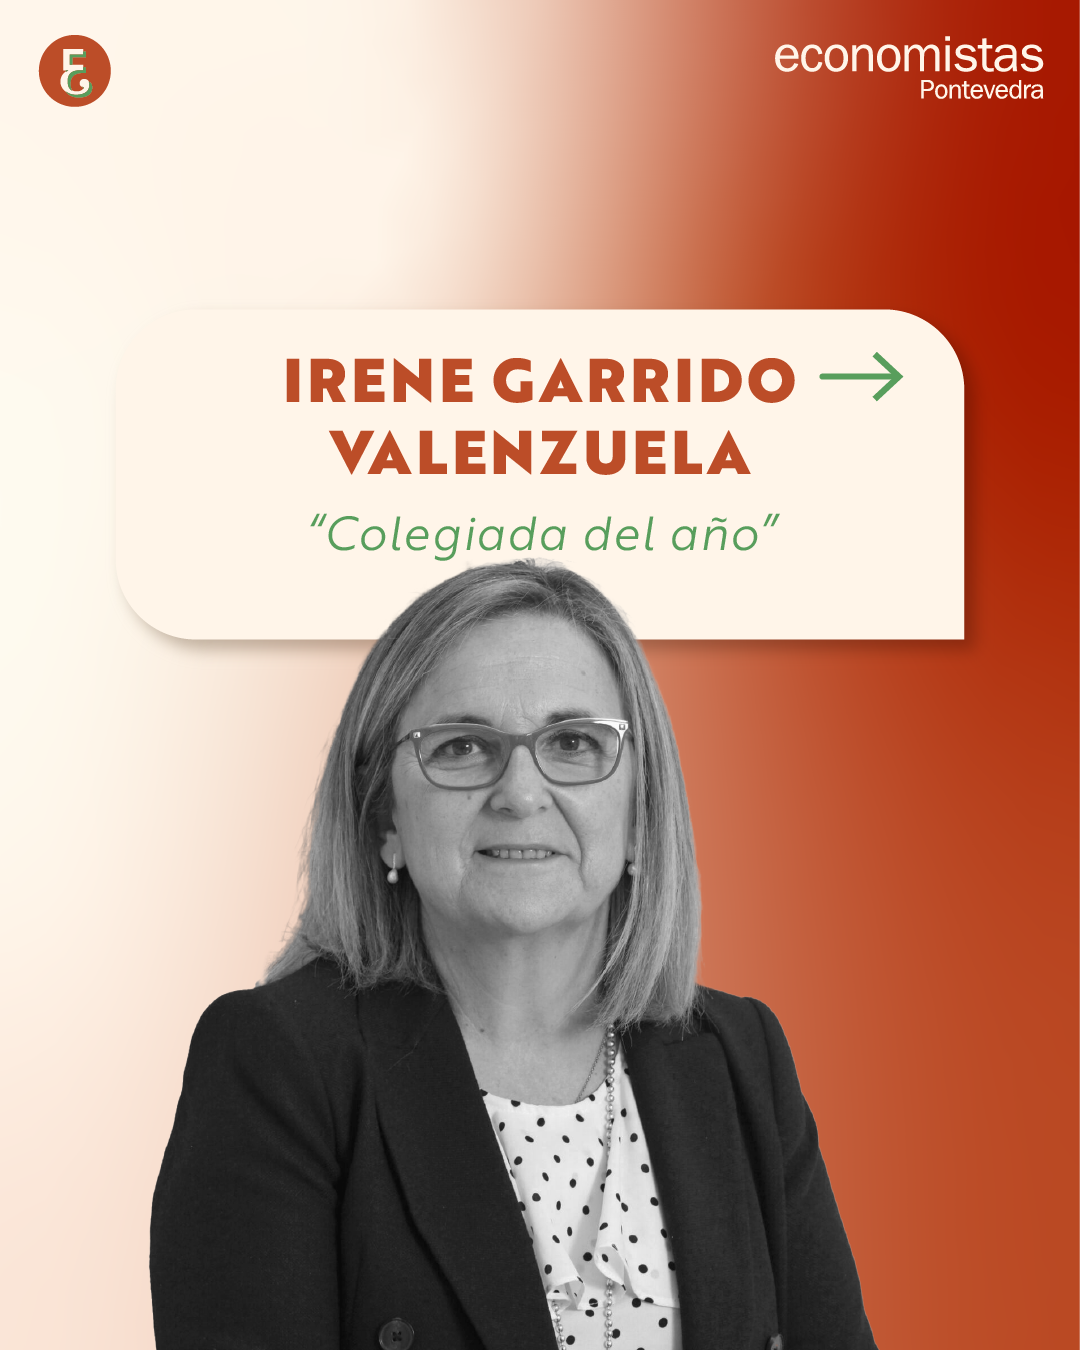 Irene Garrido Valenzuela